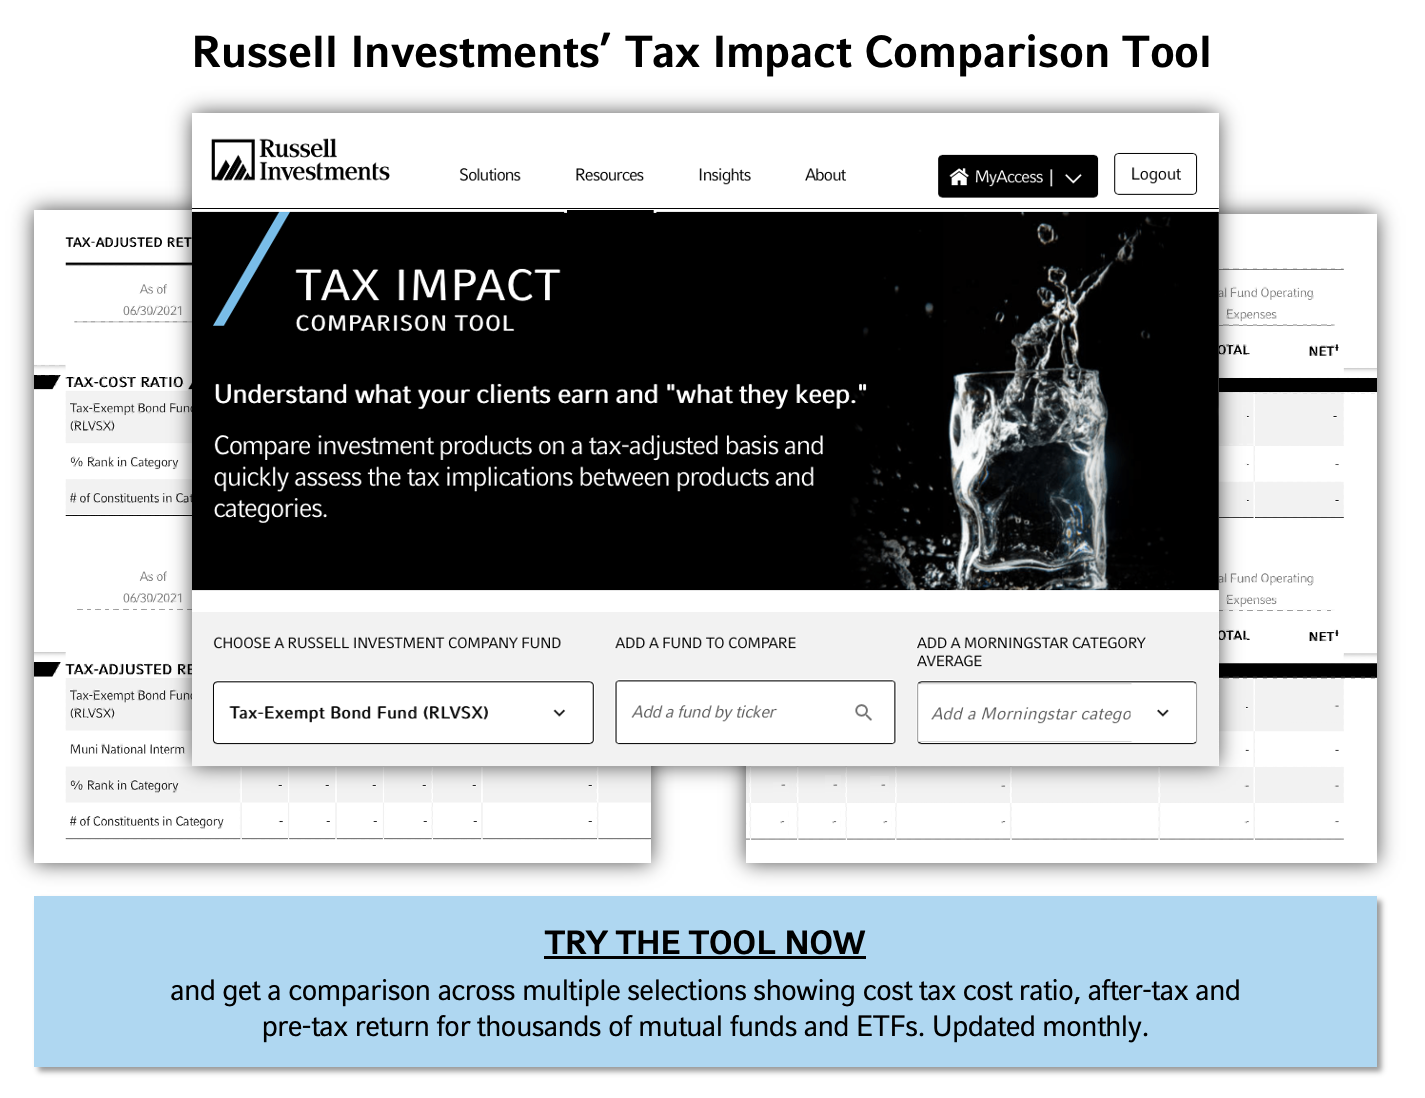 Tax impact comparison tool